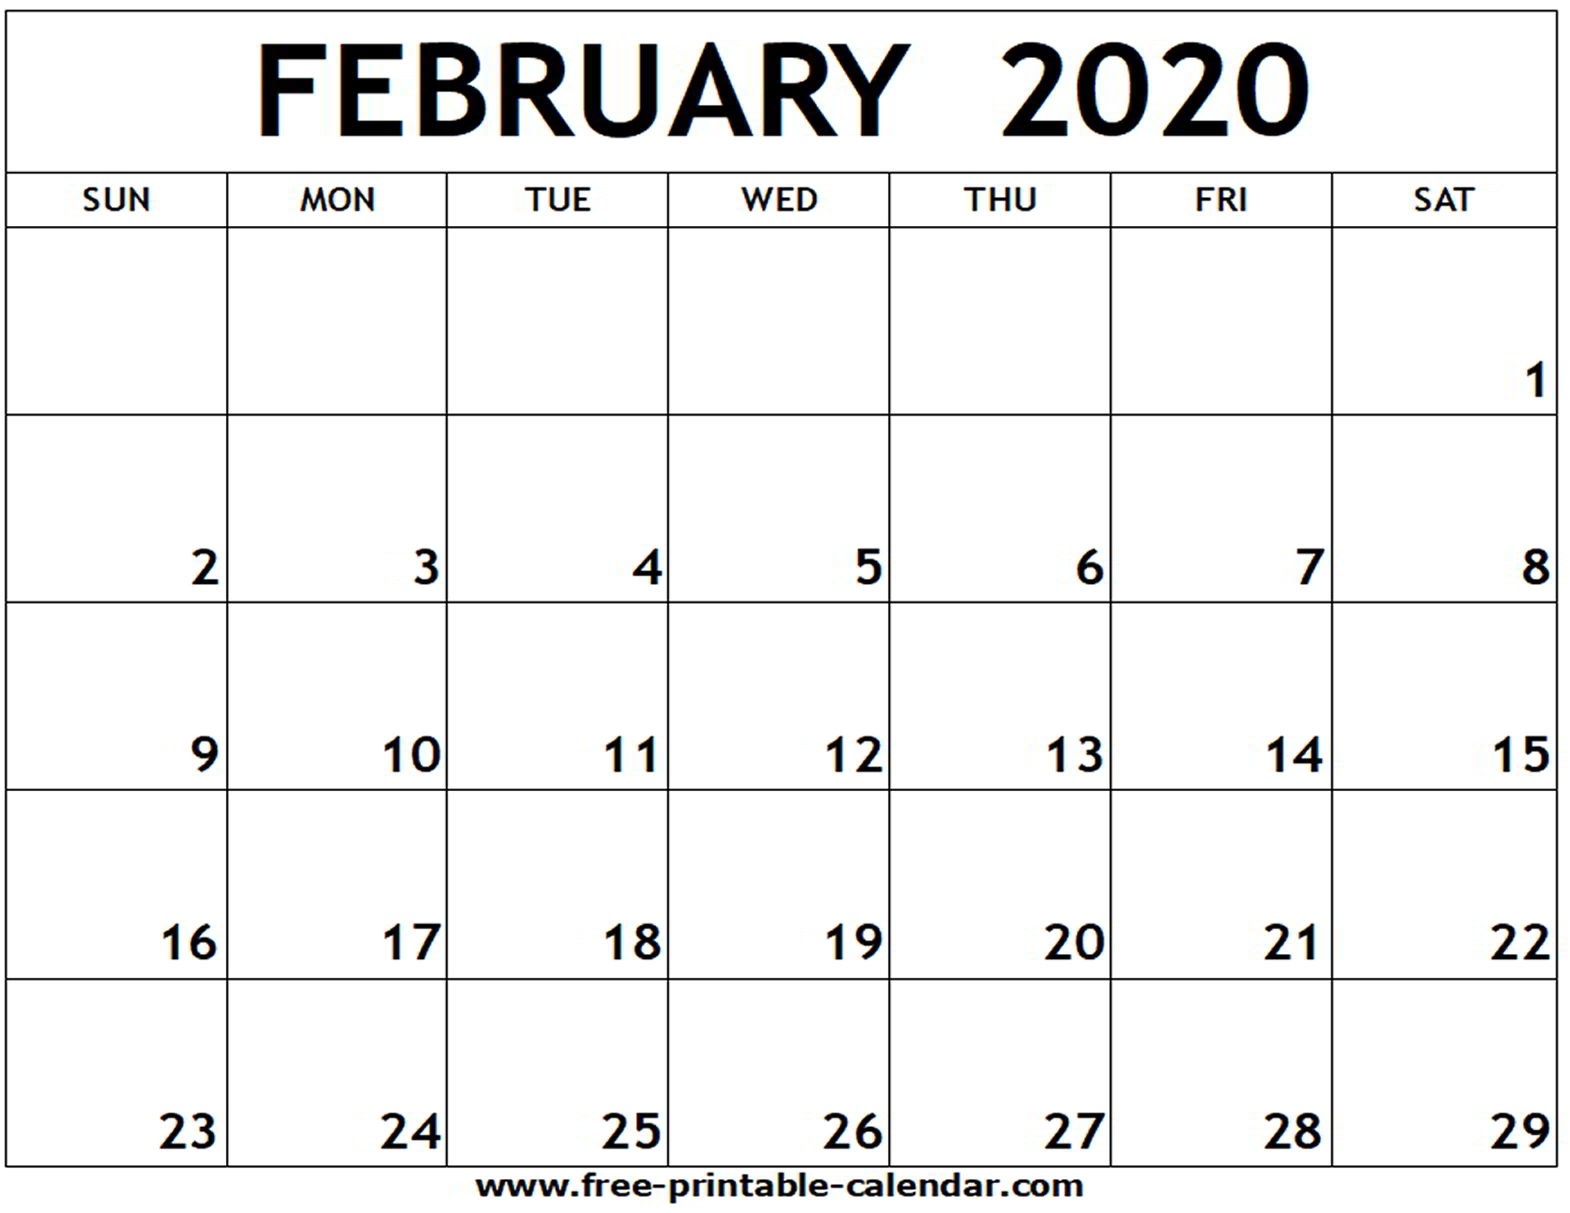 February 2020 Printable Calendar - Free-Printable-Calendar  Printable February 2020 Calendar